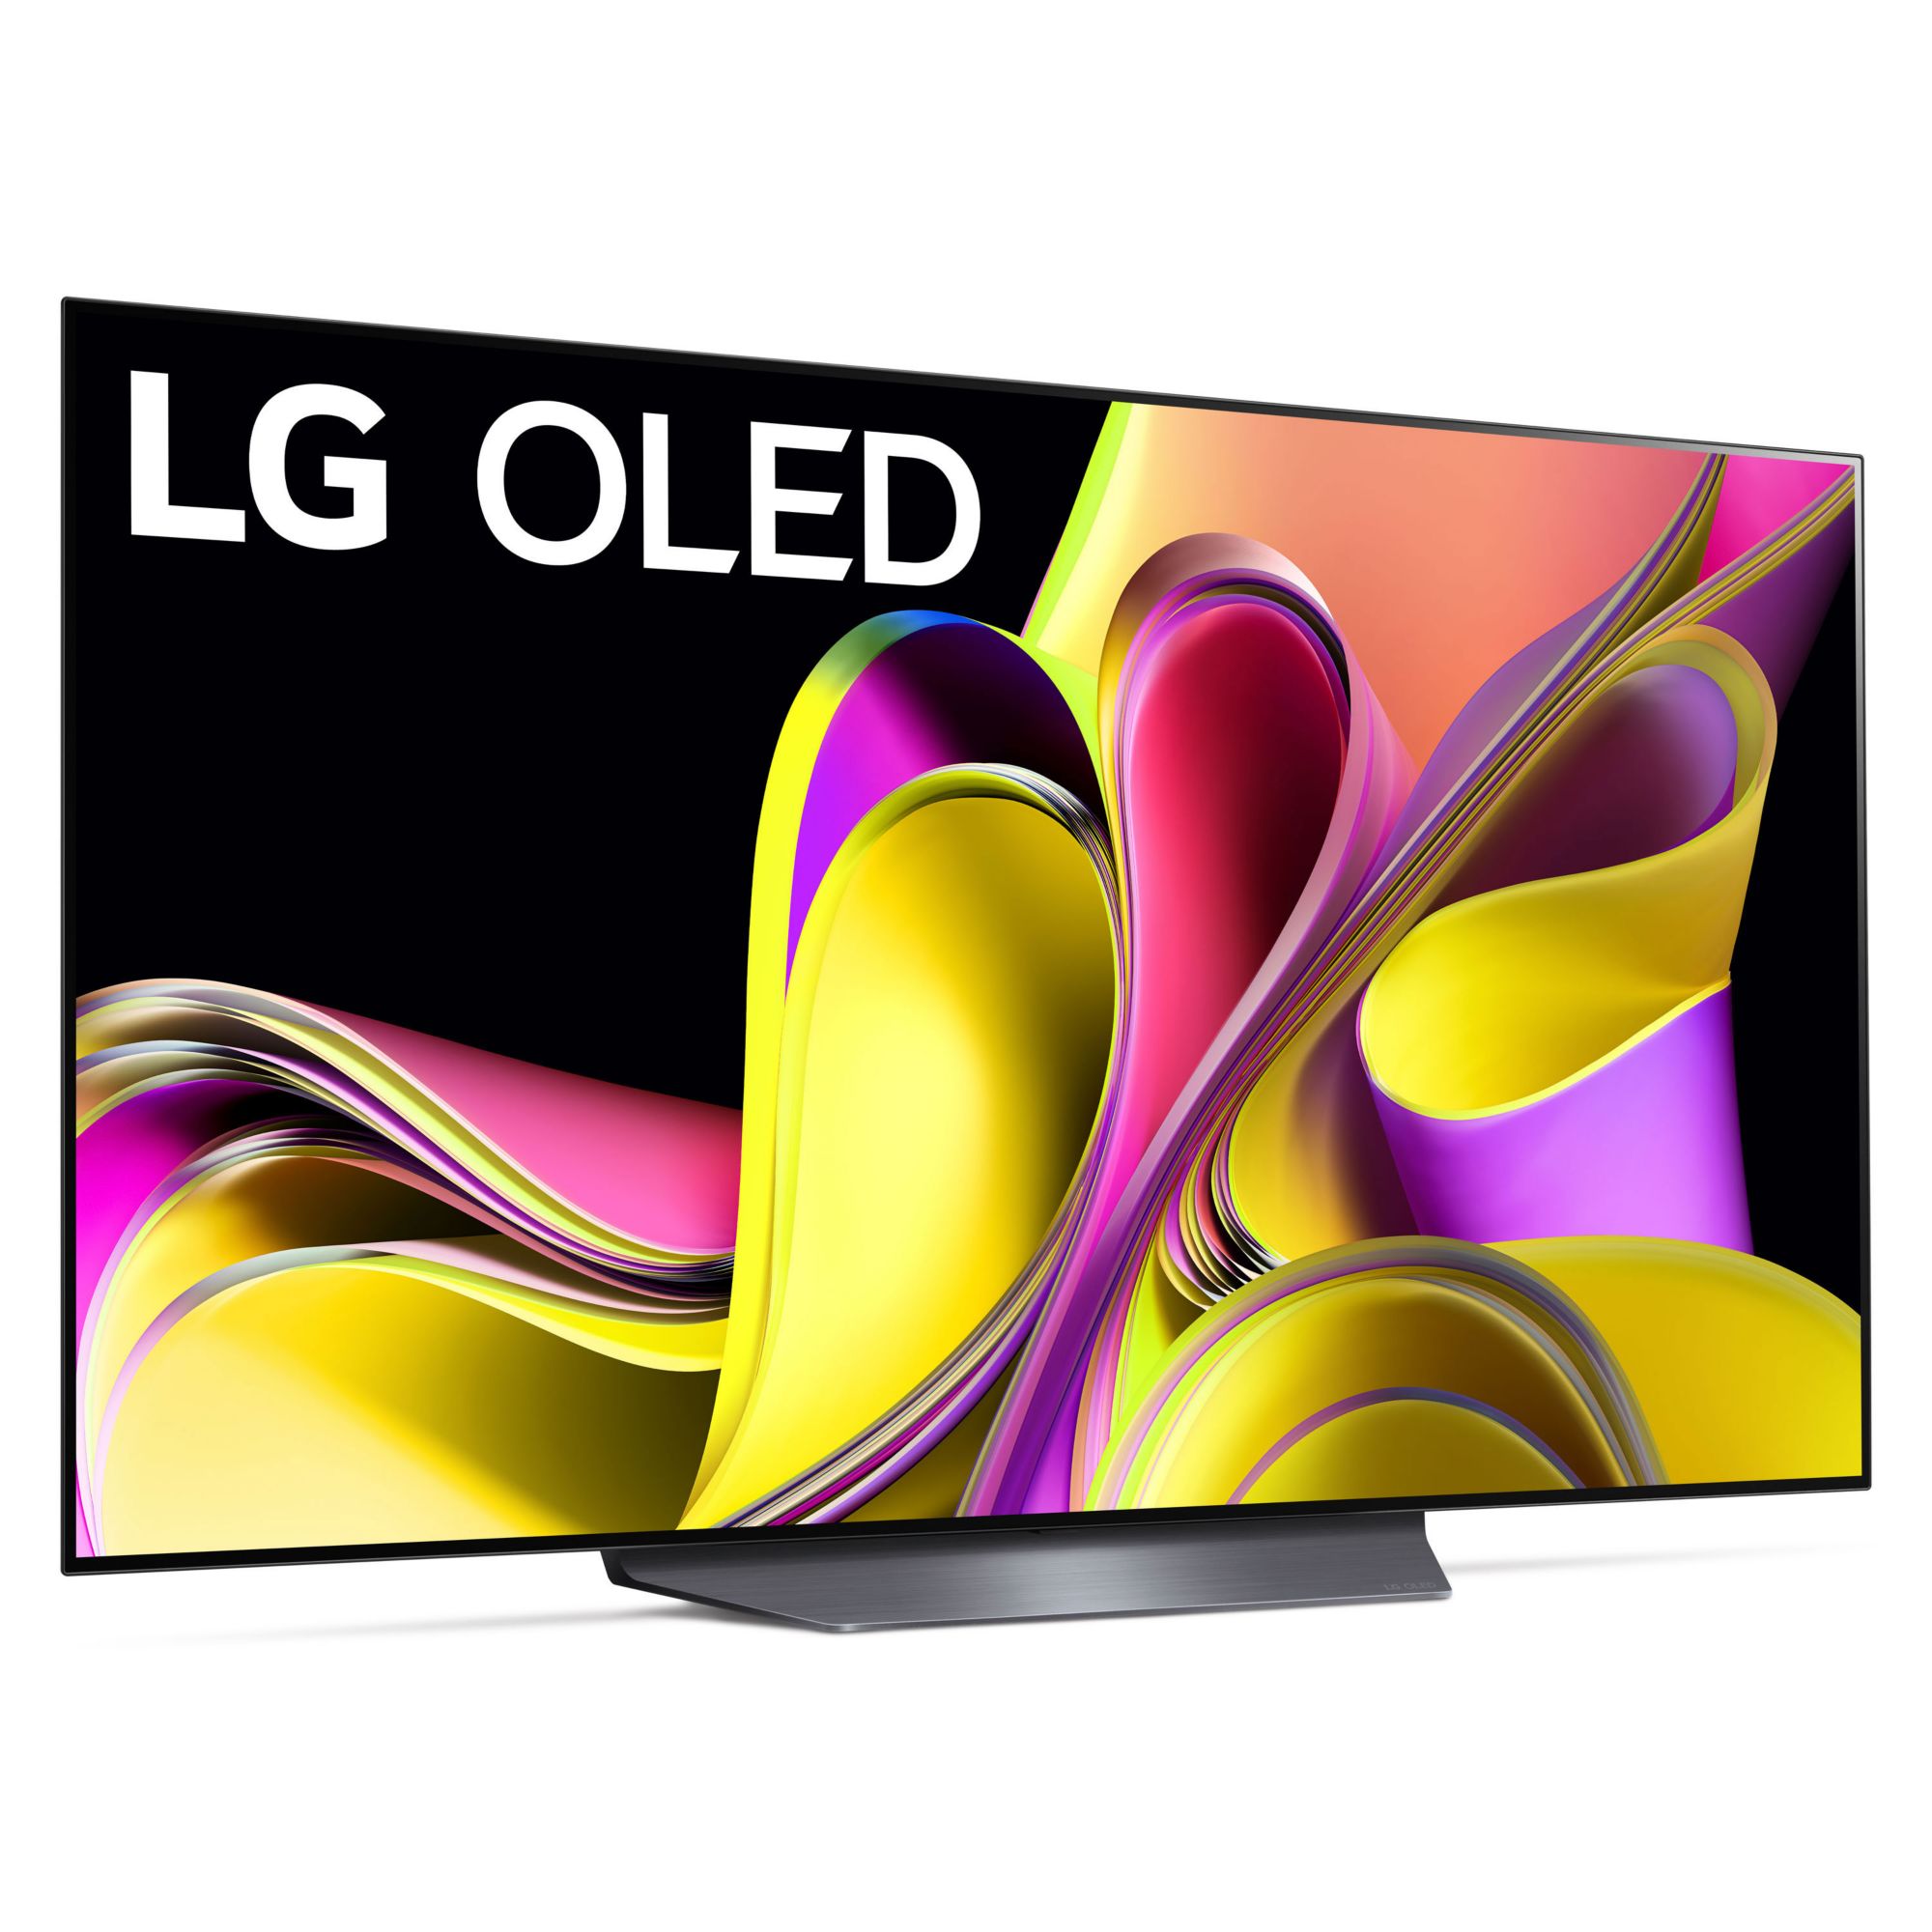 LG Televisor Lg Nanocell 55 Pulg. 4k Smart Tv Con Thinq Ai